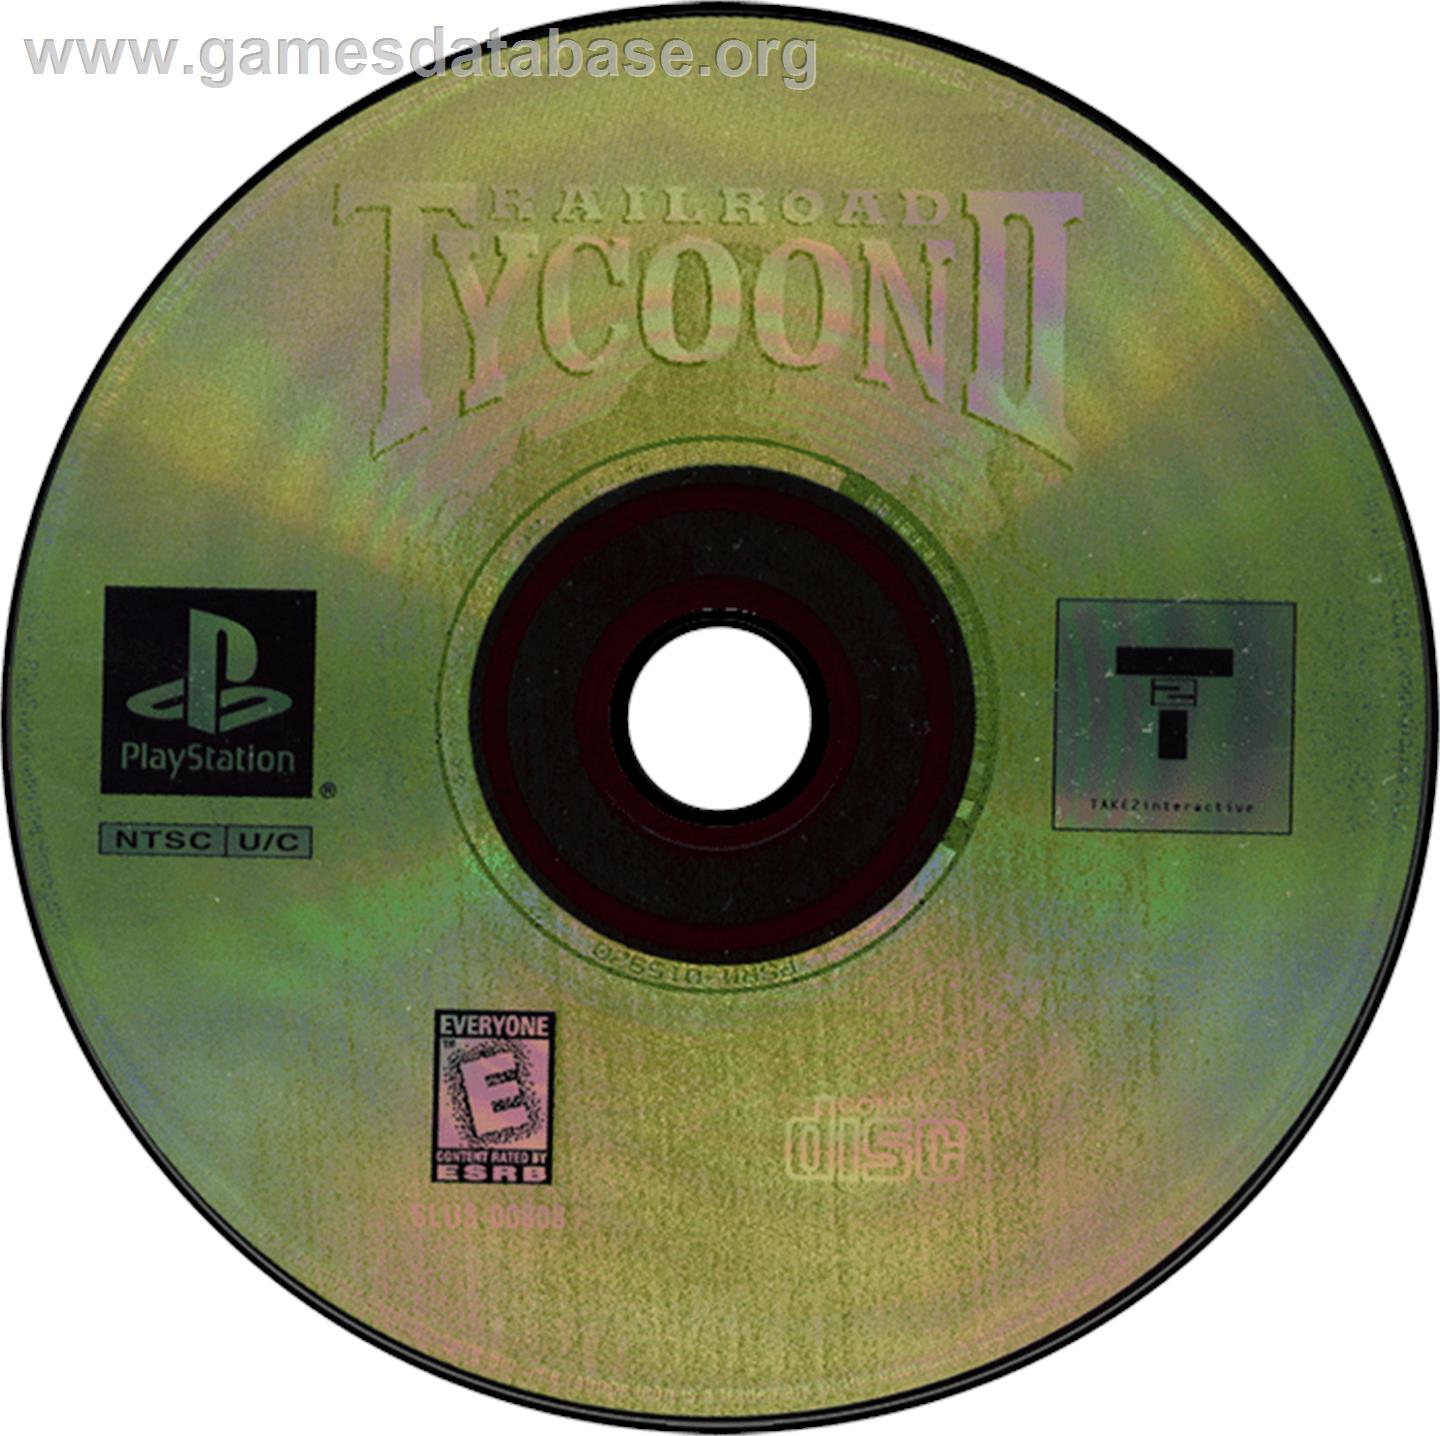 Railroad Tycoon II - Sony Playstation - Artwork - Disc